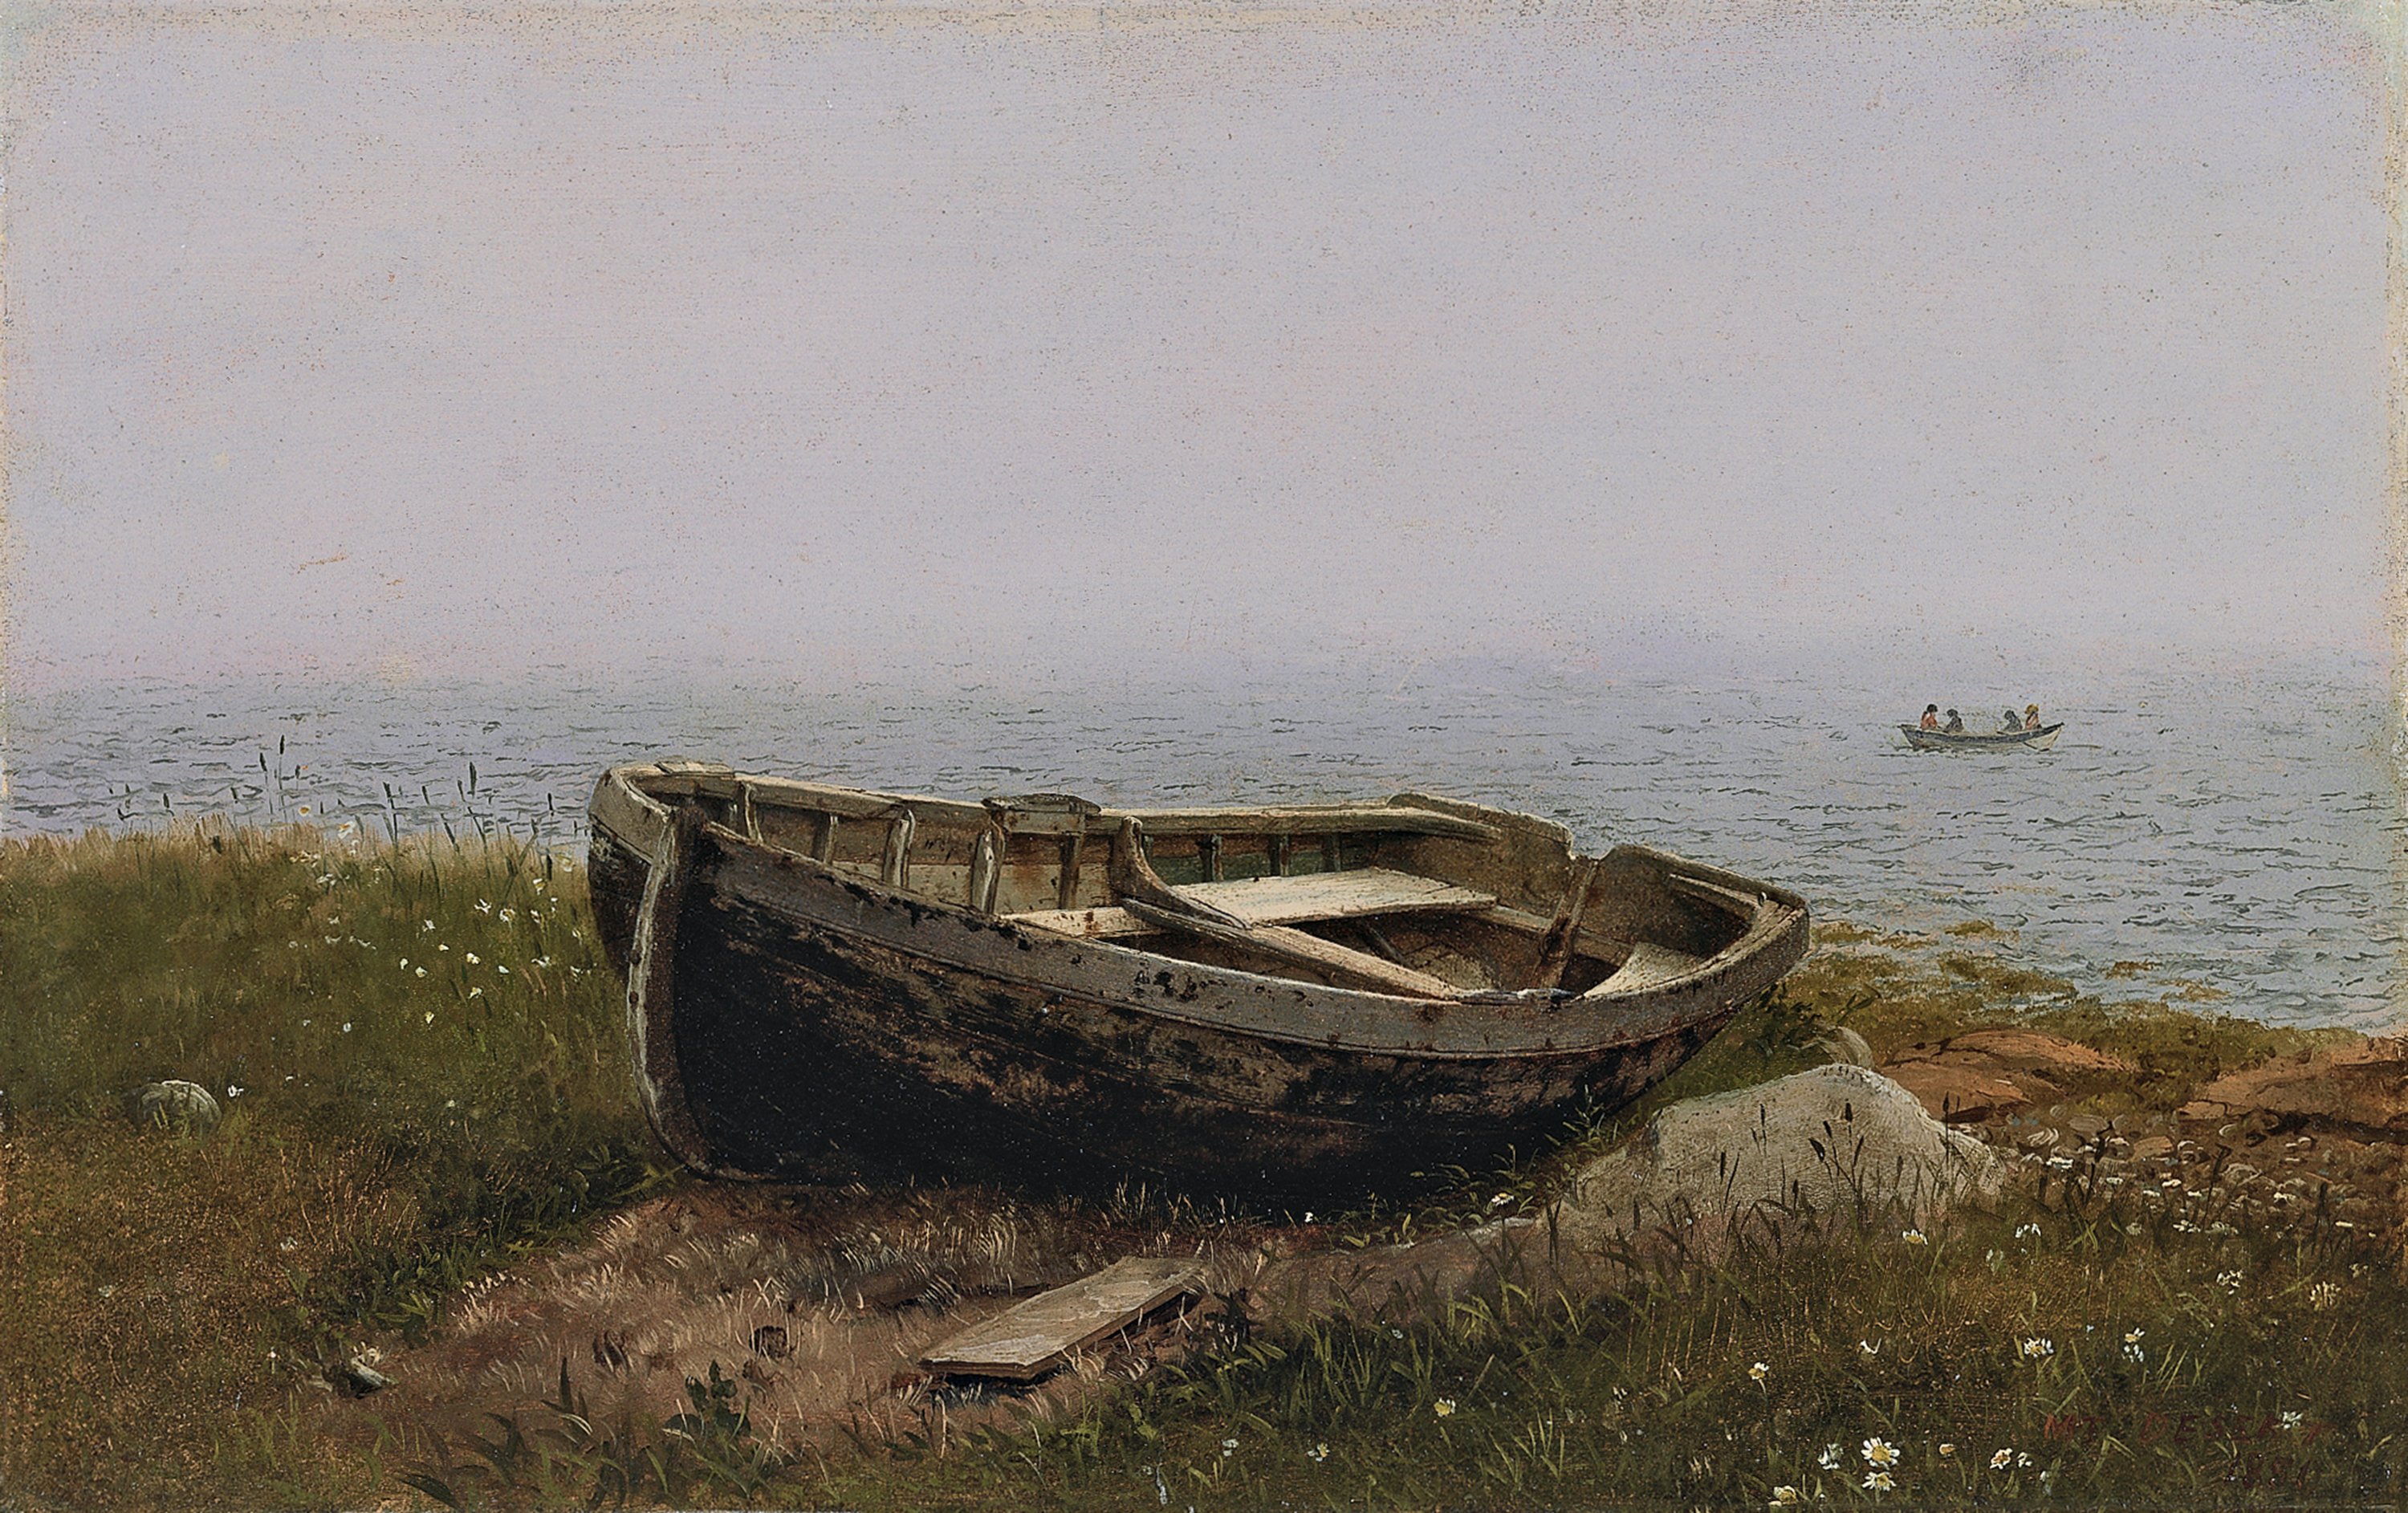 Abandoned Skiff. Bote abandonado, 1850